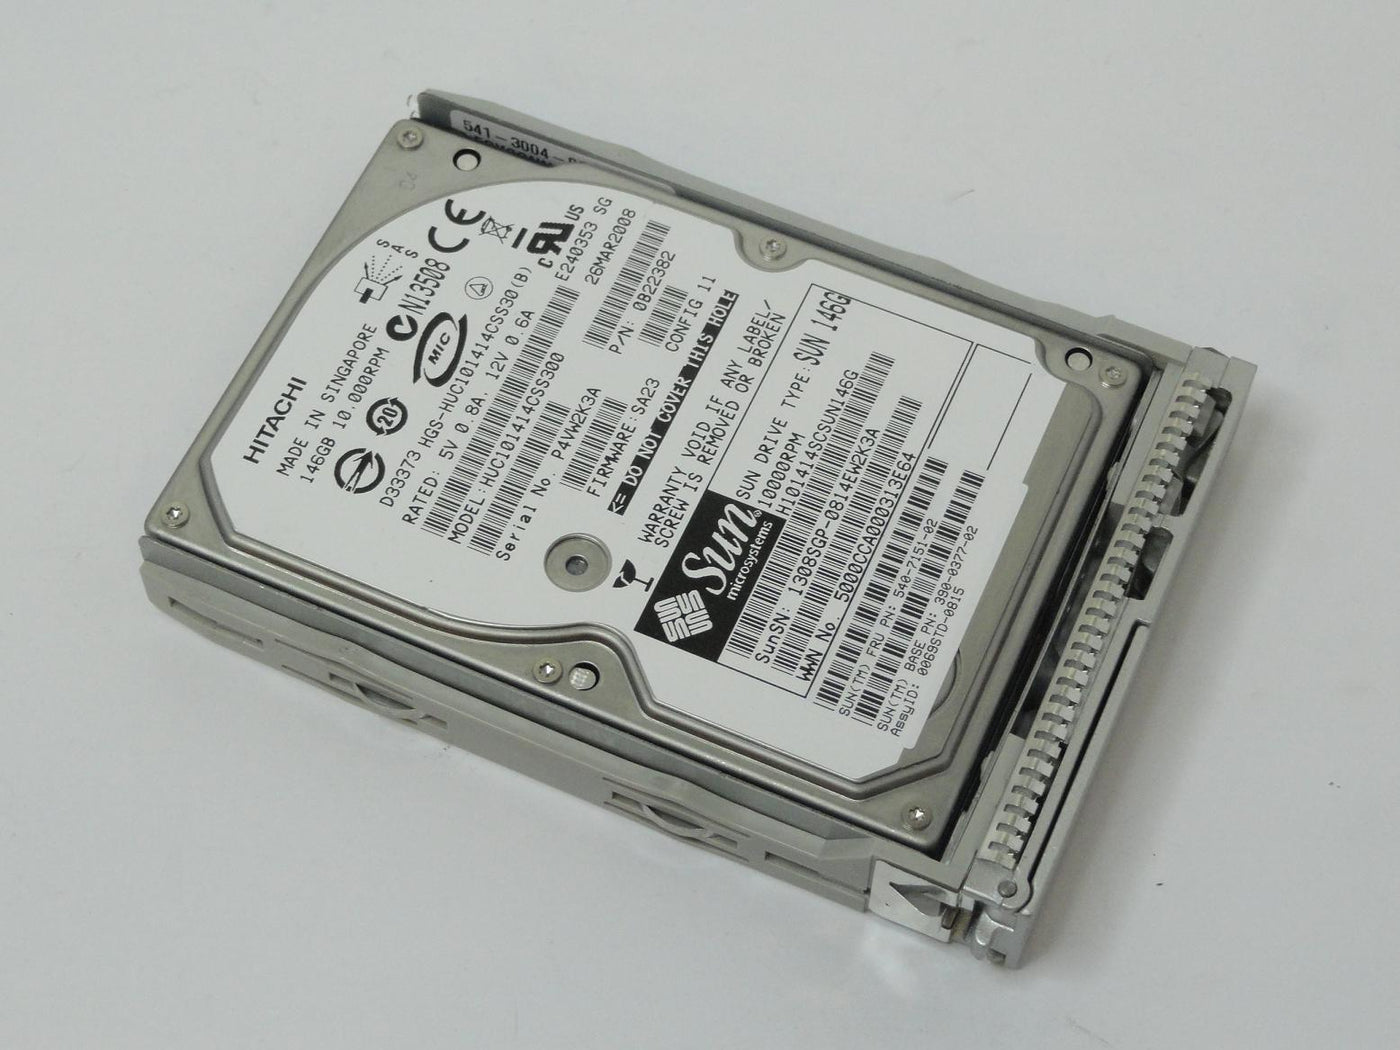 0B22382 - Hitachi Sun 146GB SAS 10Krpm 2.5in HDD in Caddy - Refurbished